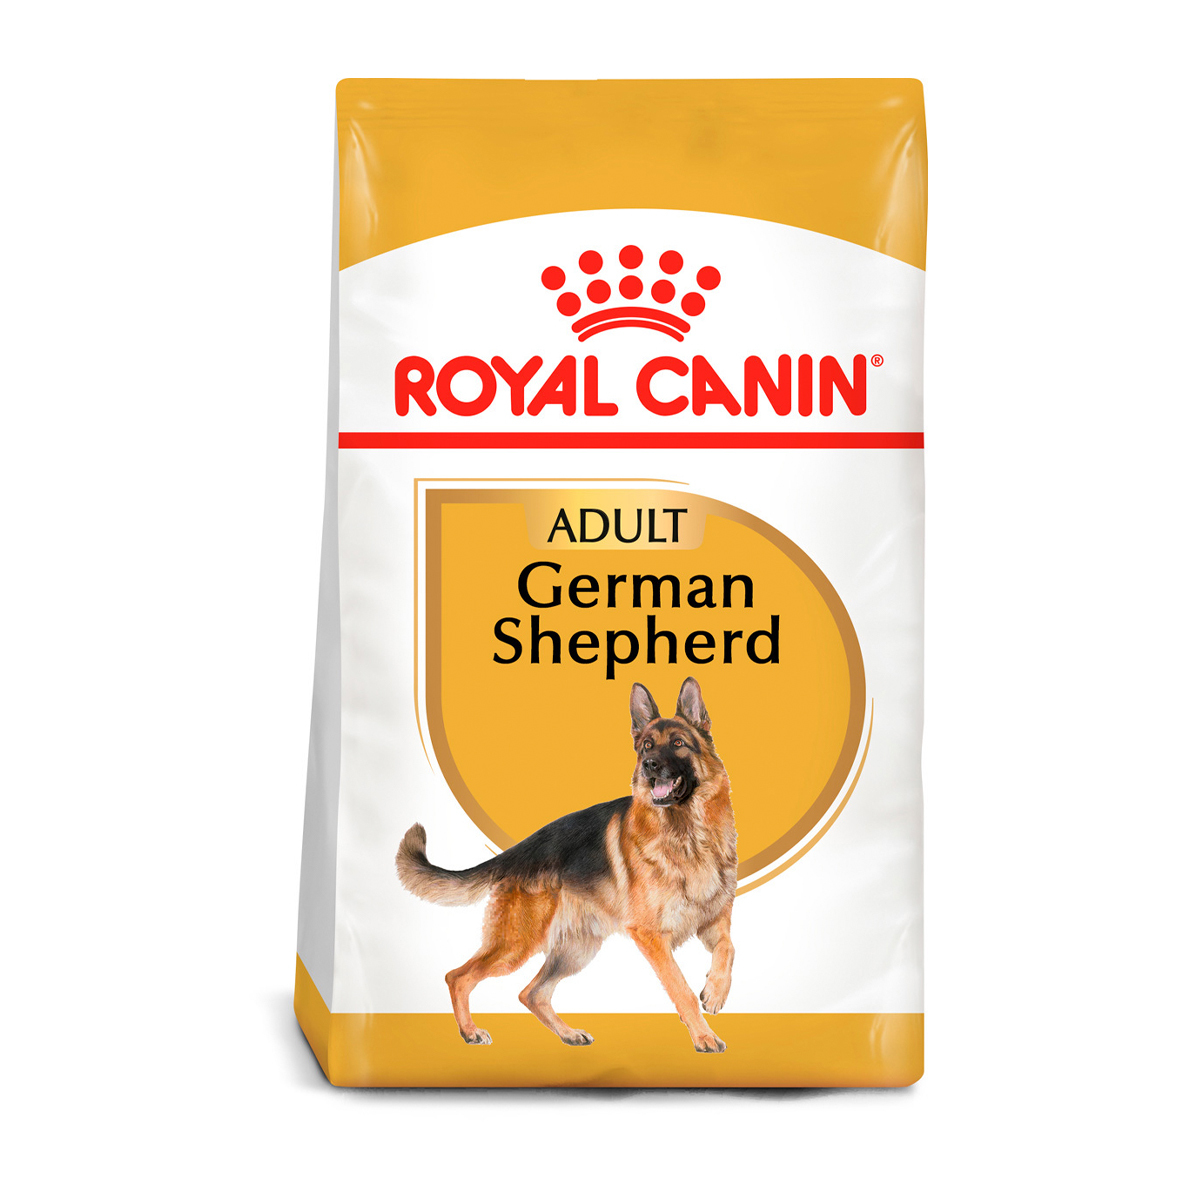 Royal Canin Alimento Seco para perro Adulto Raza Pastor Alemán, 13.6 kg